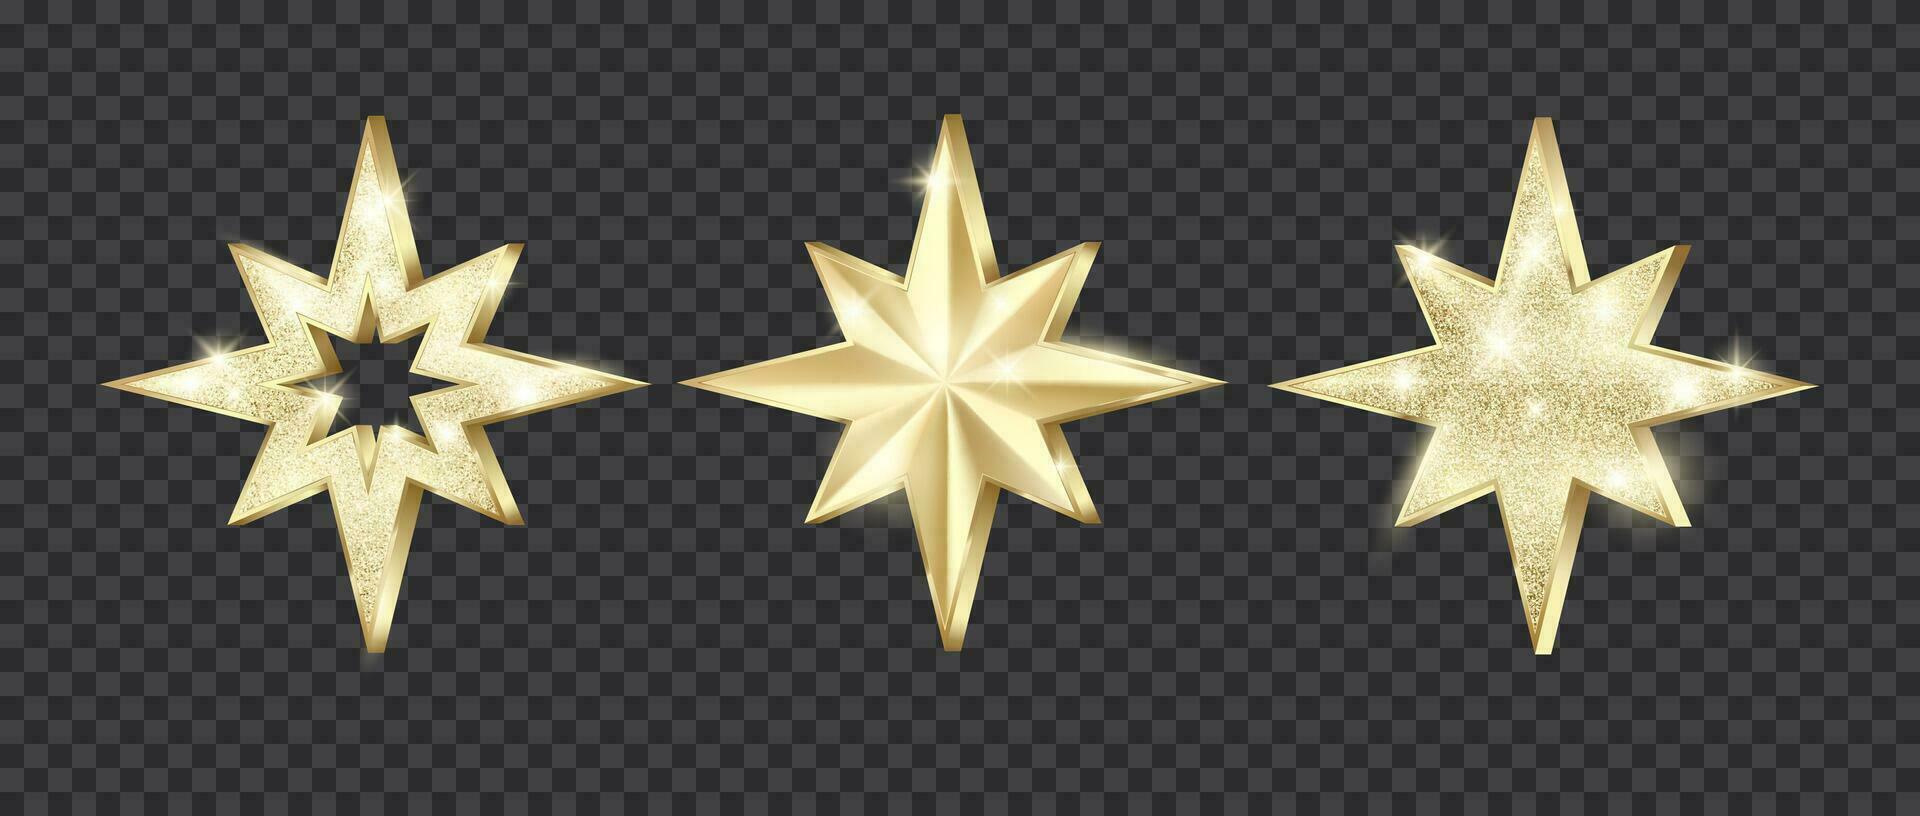 Set of golden stars with glitter. Christmas decoration element. Luxury elegant award - Star. Vector illustration isolated